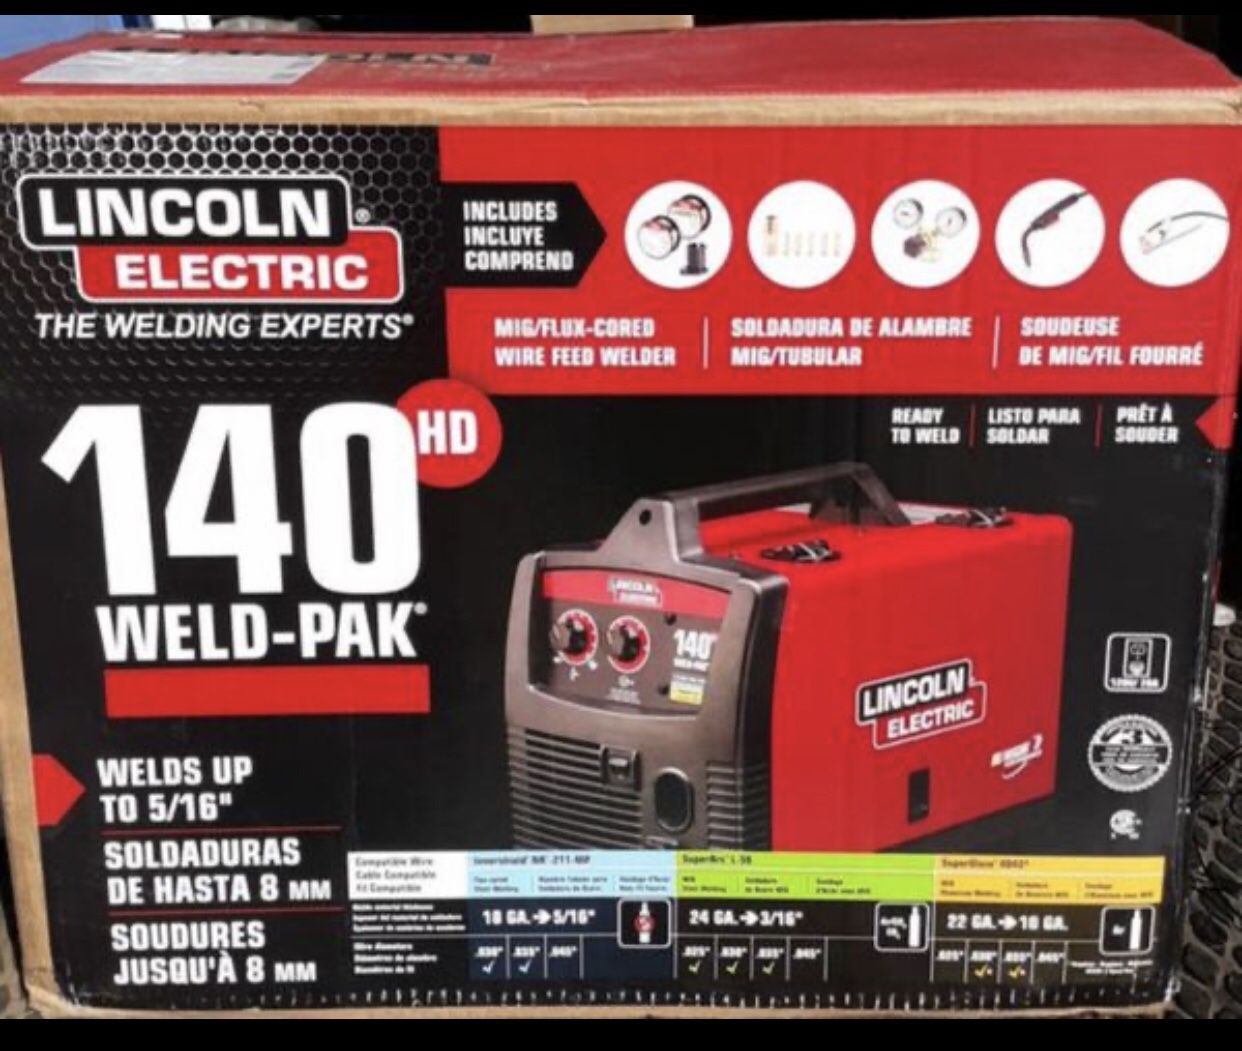 Lincoln Electric 140 Weld Pack HD Welder